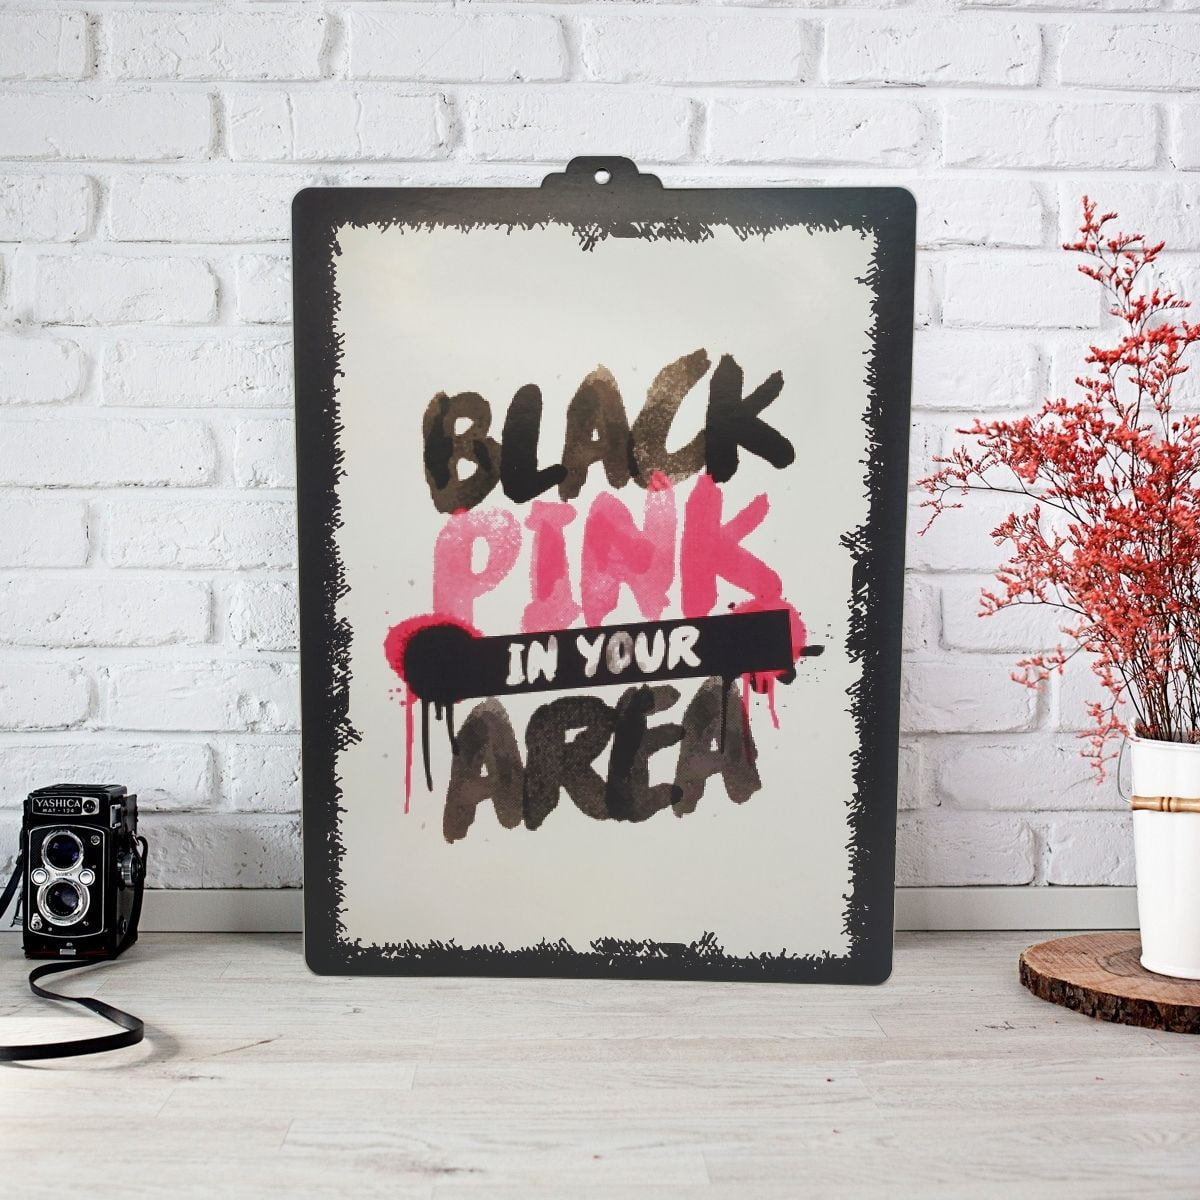 Black pink tablo 2 - black pink tablo - figurex